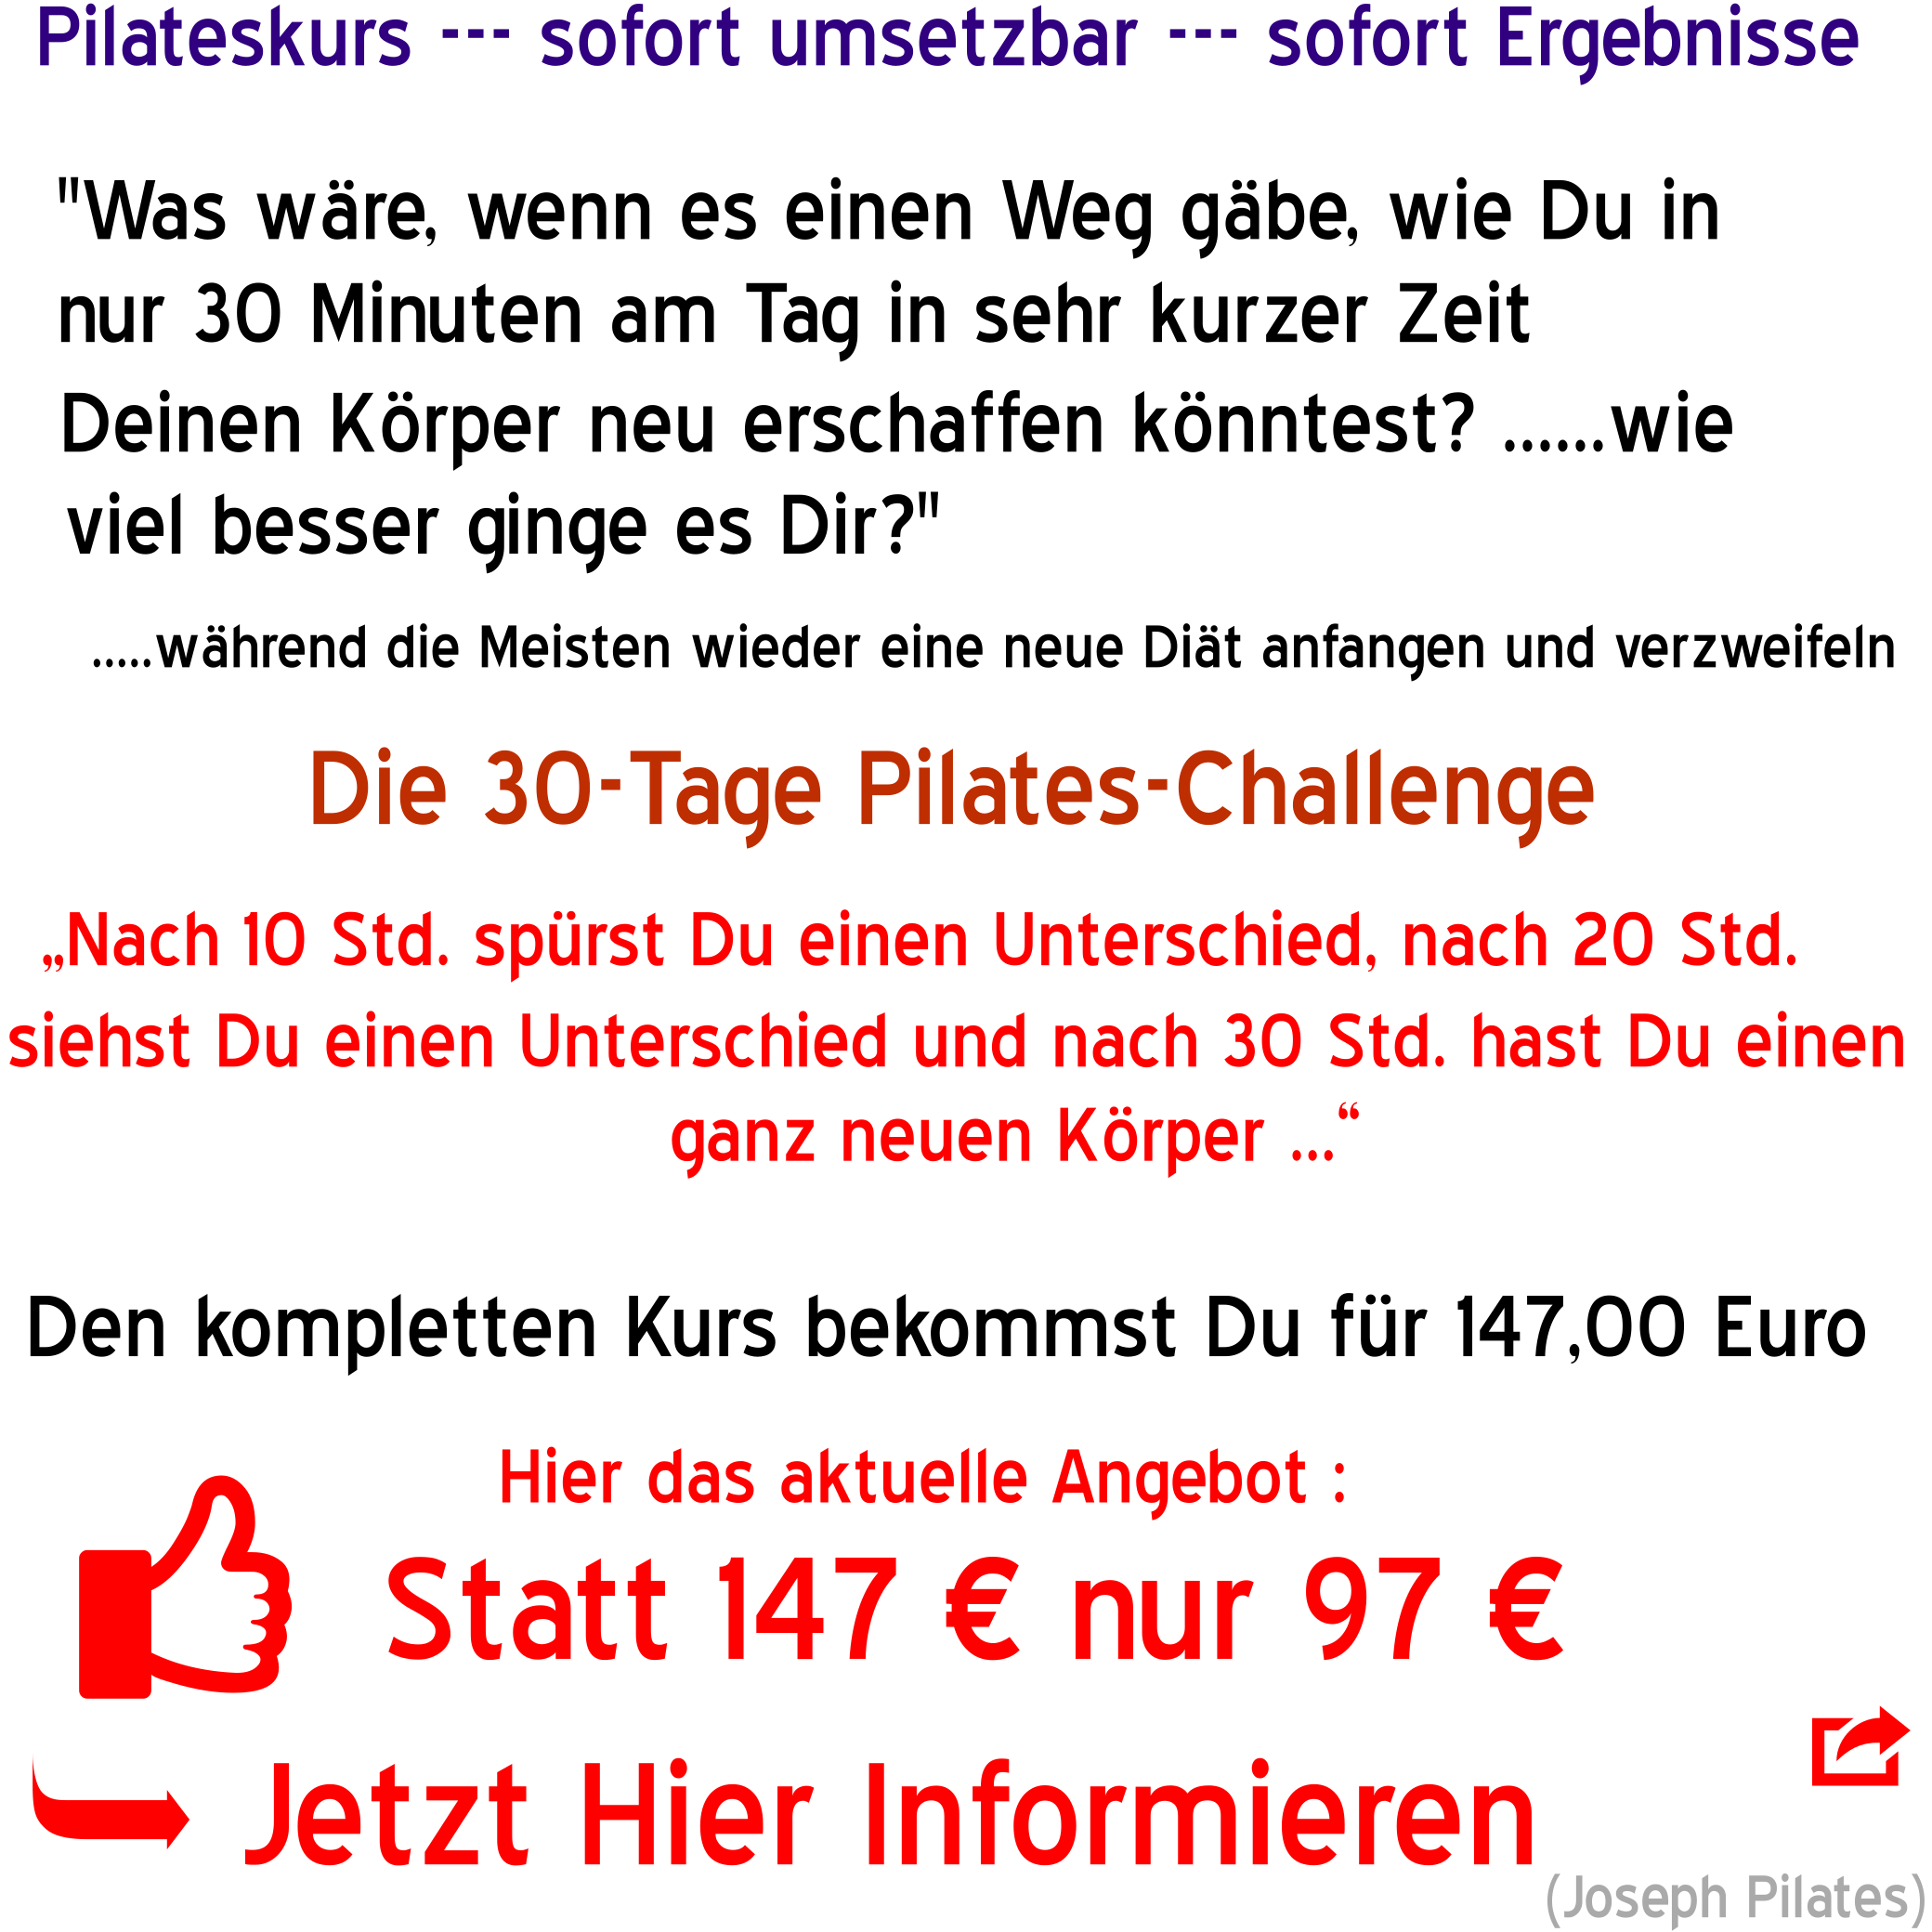 Pilateskurs 30-Tage Pilates-Challenge